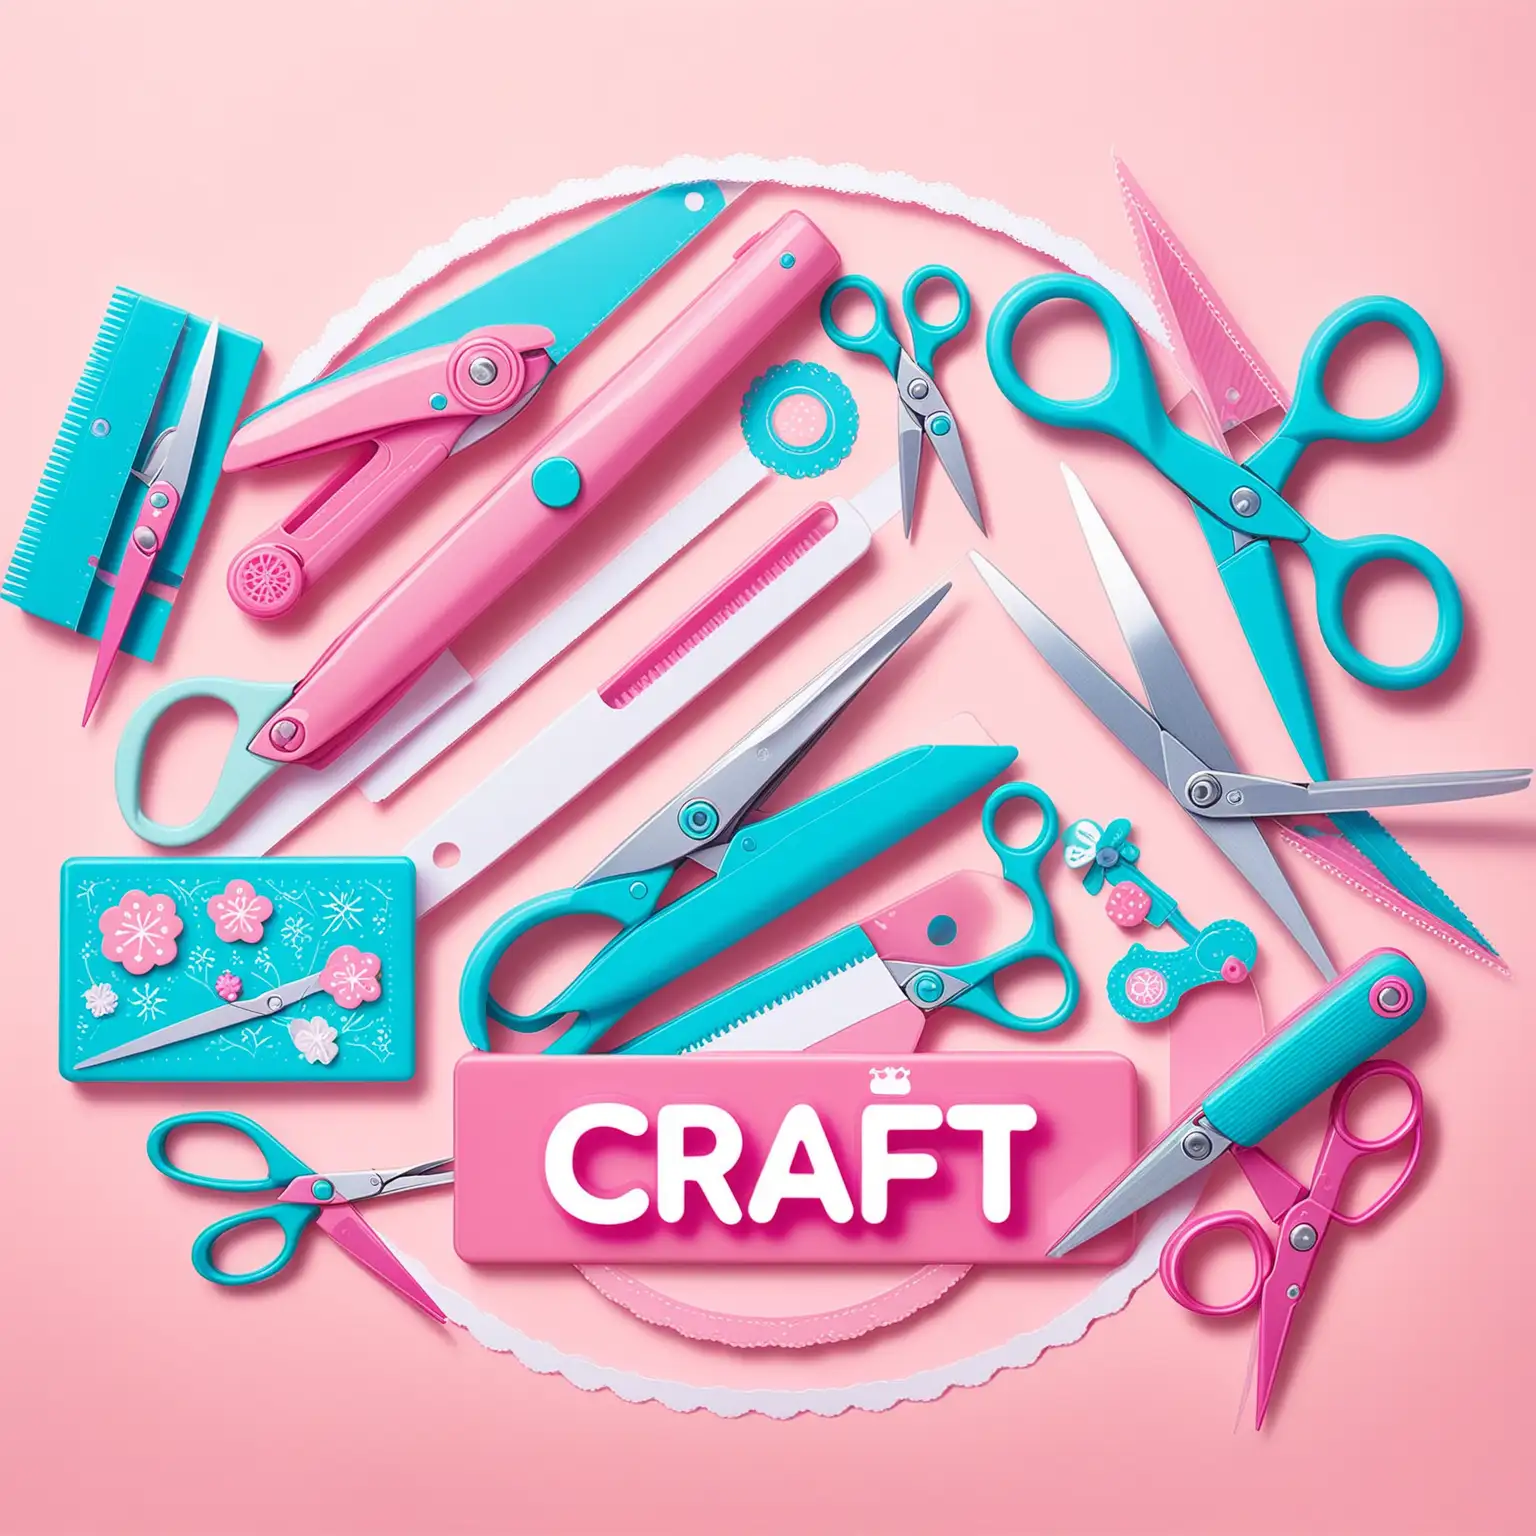  craft logo, scissors, cutting machine, pink, blue designs, picture of a woman crafting, 